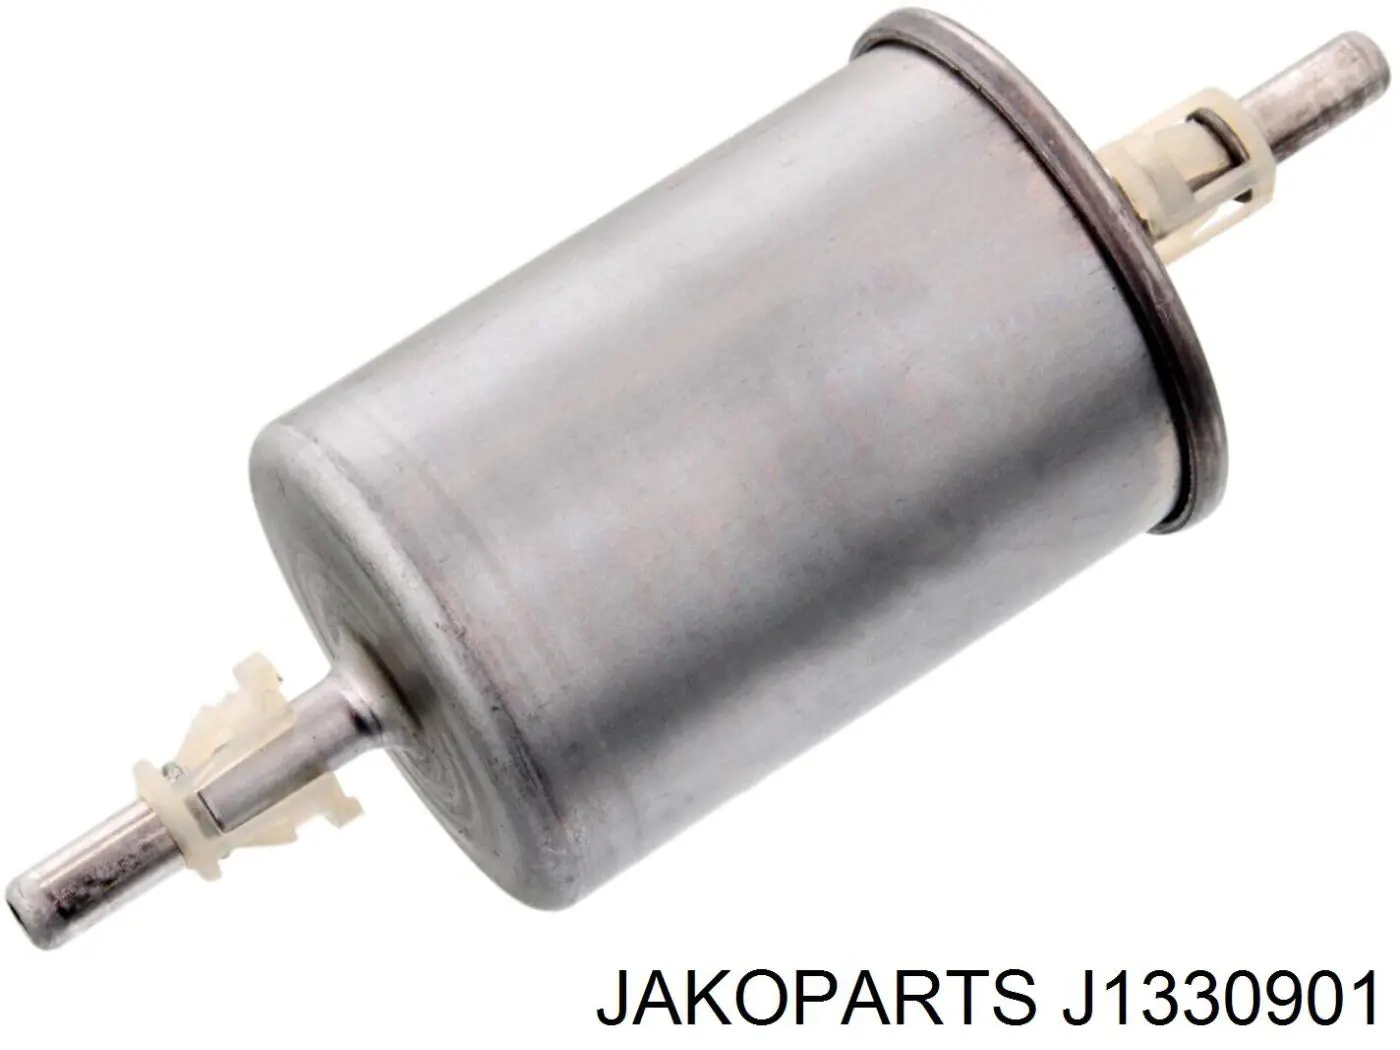 J1330901 Jakoparts filtro combustible